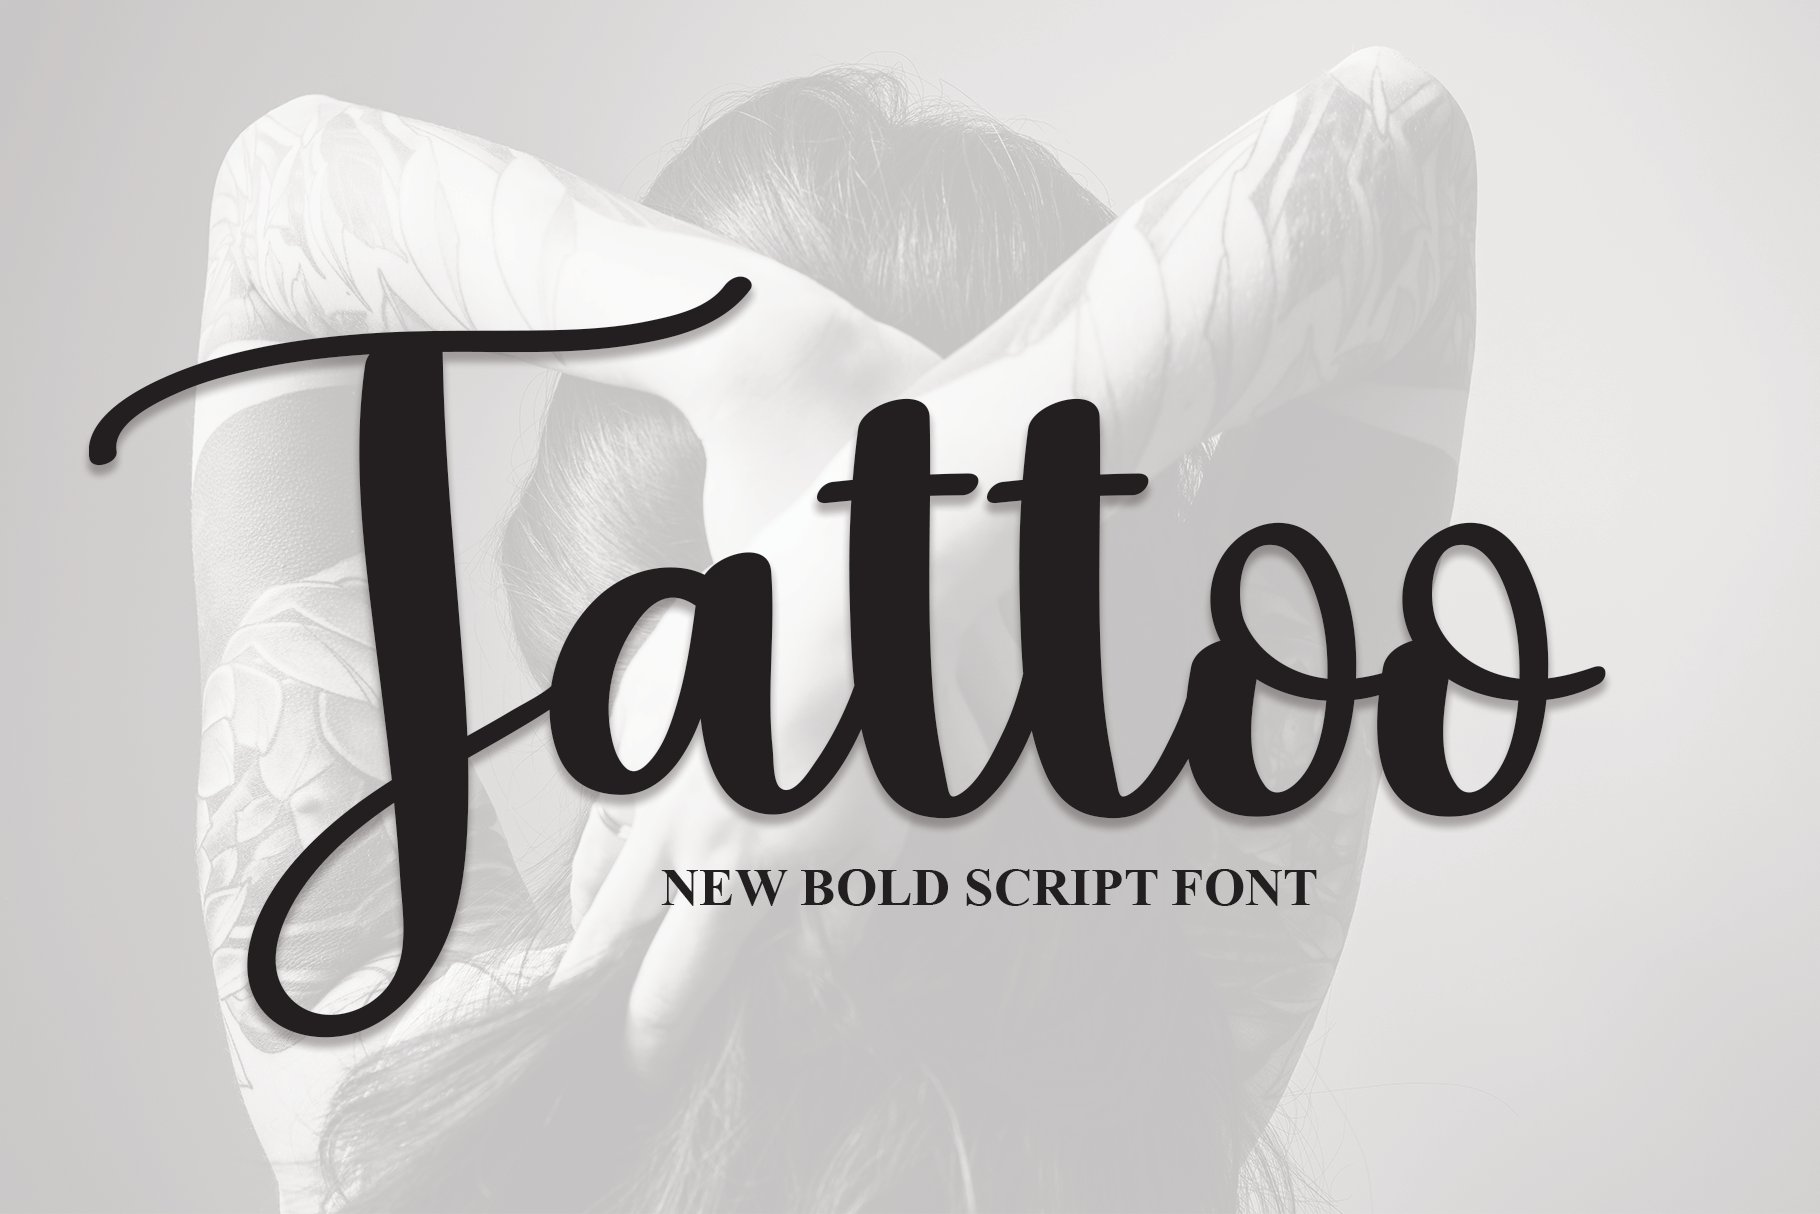 Tattoo | Script Font cover image.